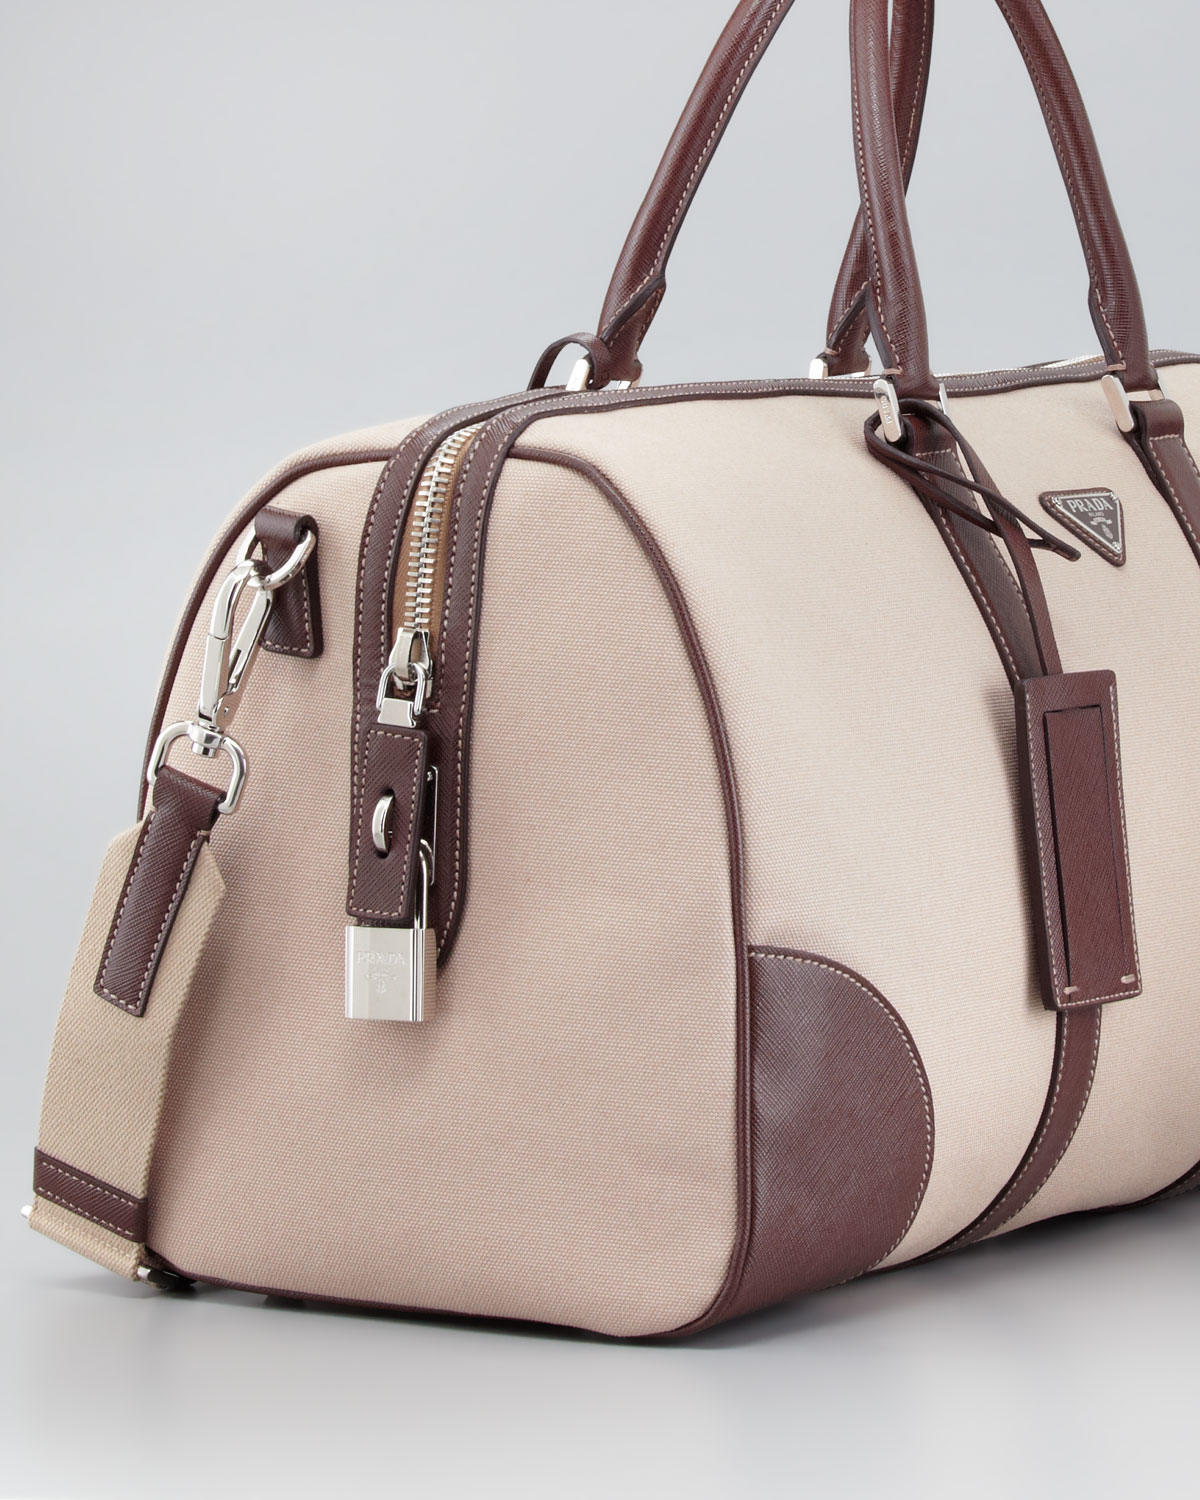 Prada Canvas Leather Trim Duffle Bag in Beige/Brown (Natural) for Men - Lyst